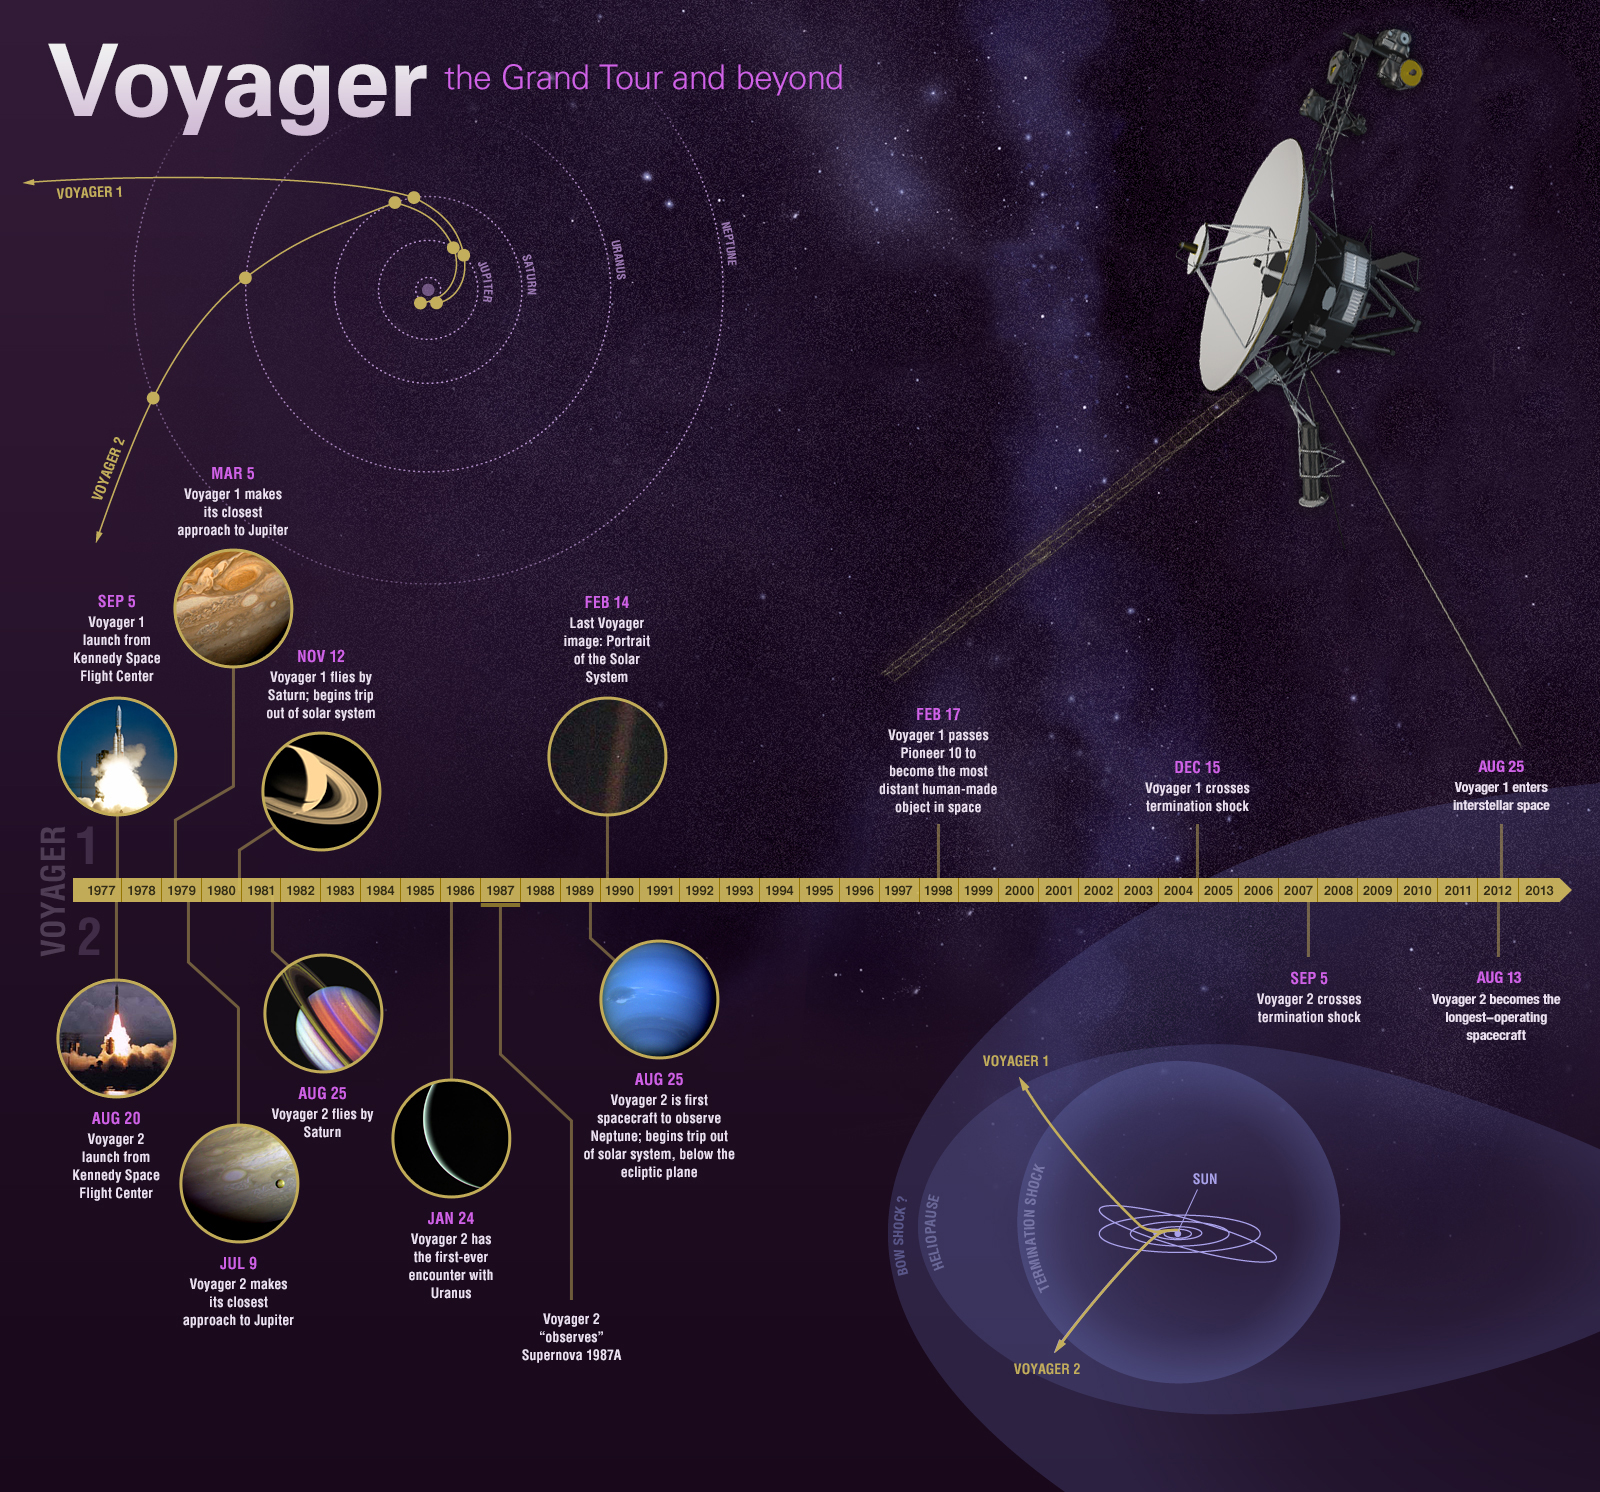 Jak przebiegała misja Voyager? Foto: voyager.jpl.nasa.gov